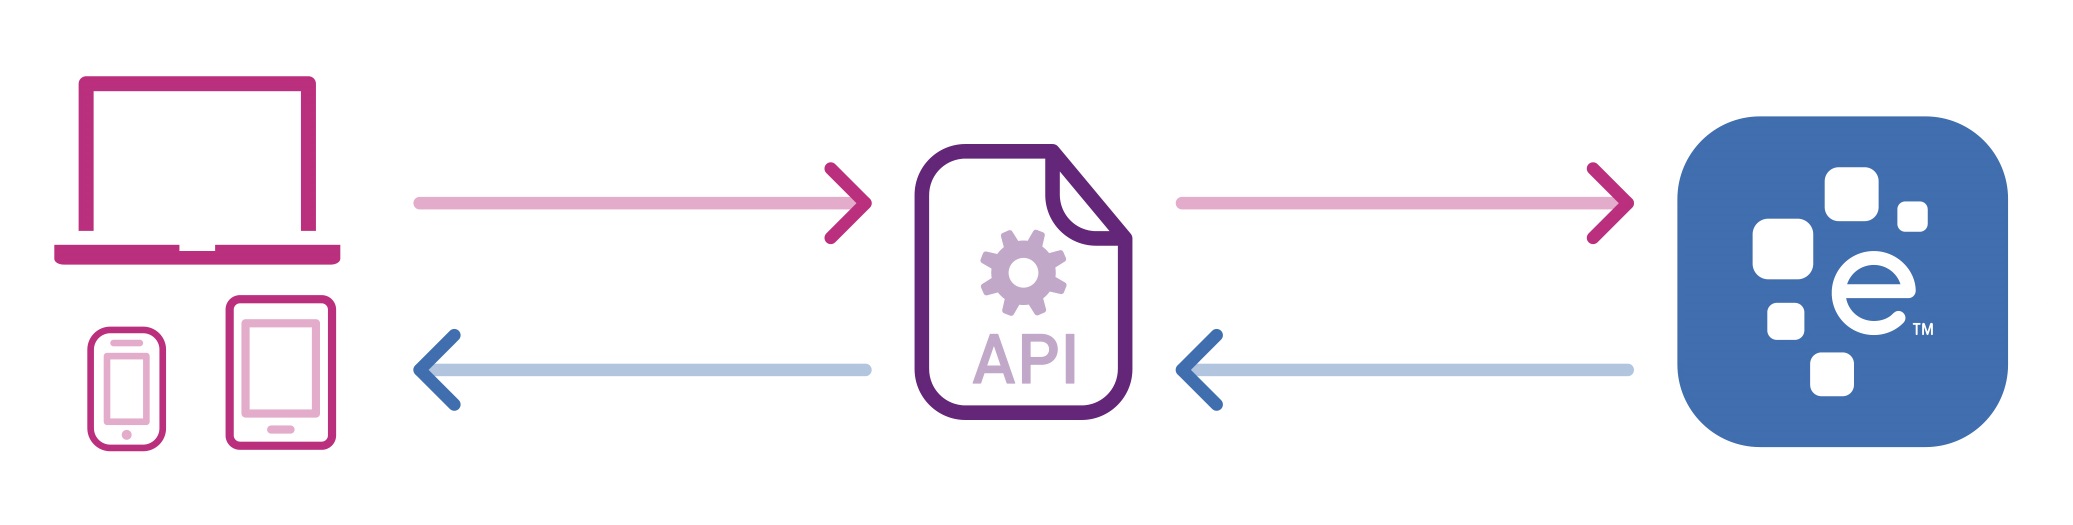 Application-Programming-Interface-API-Explained-2